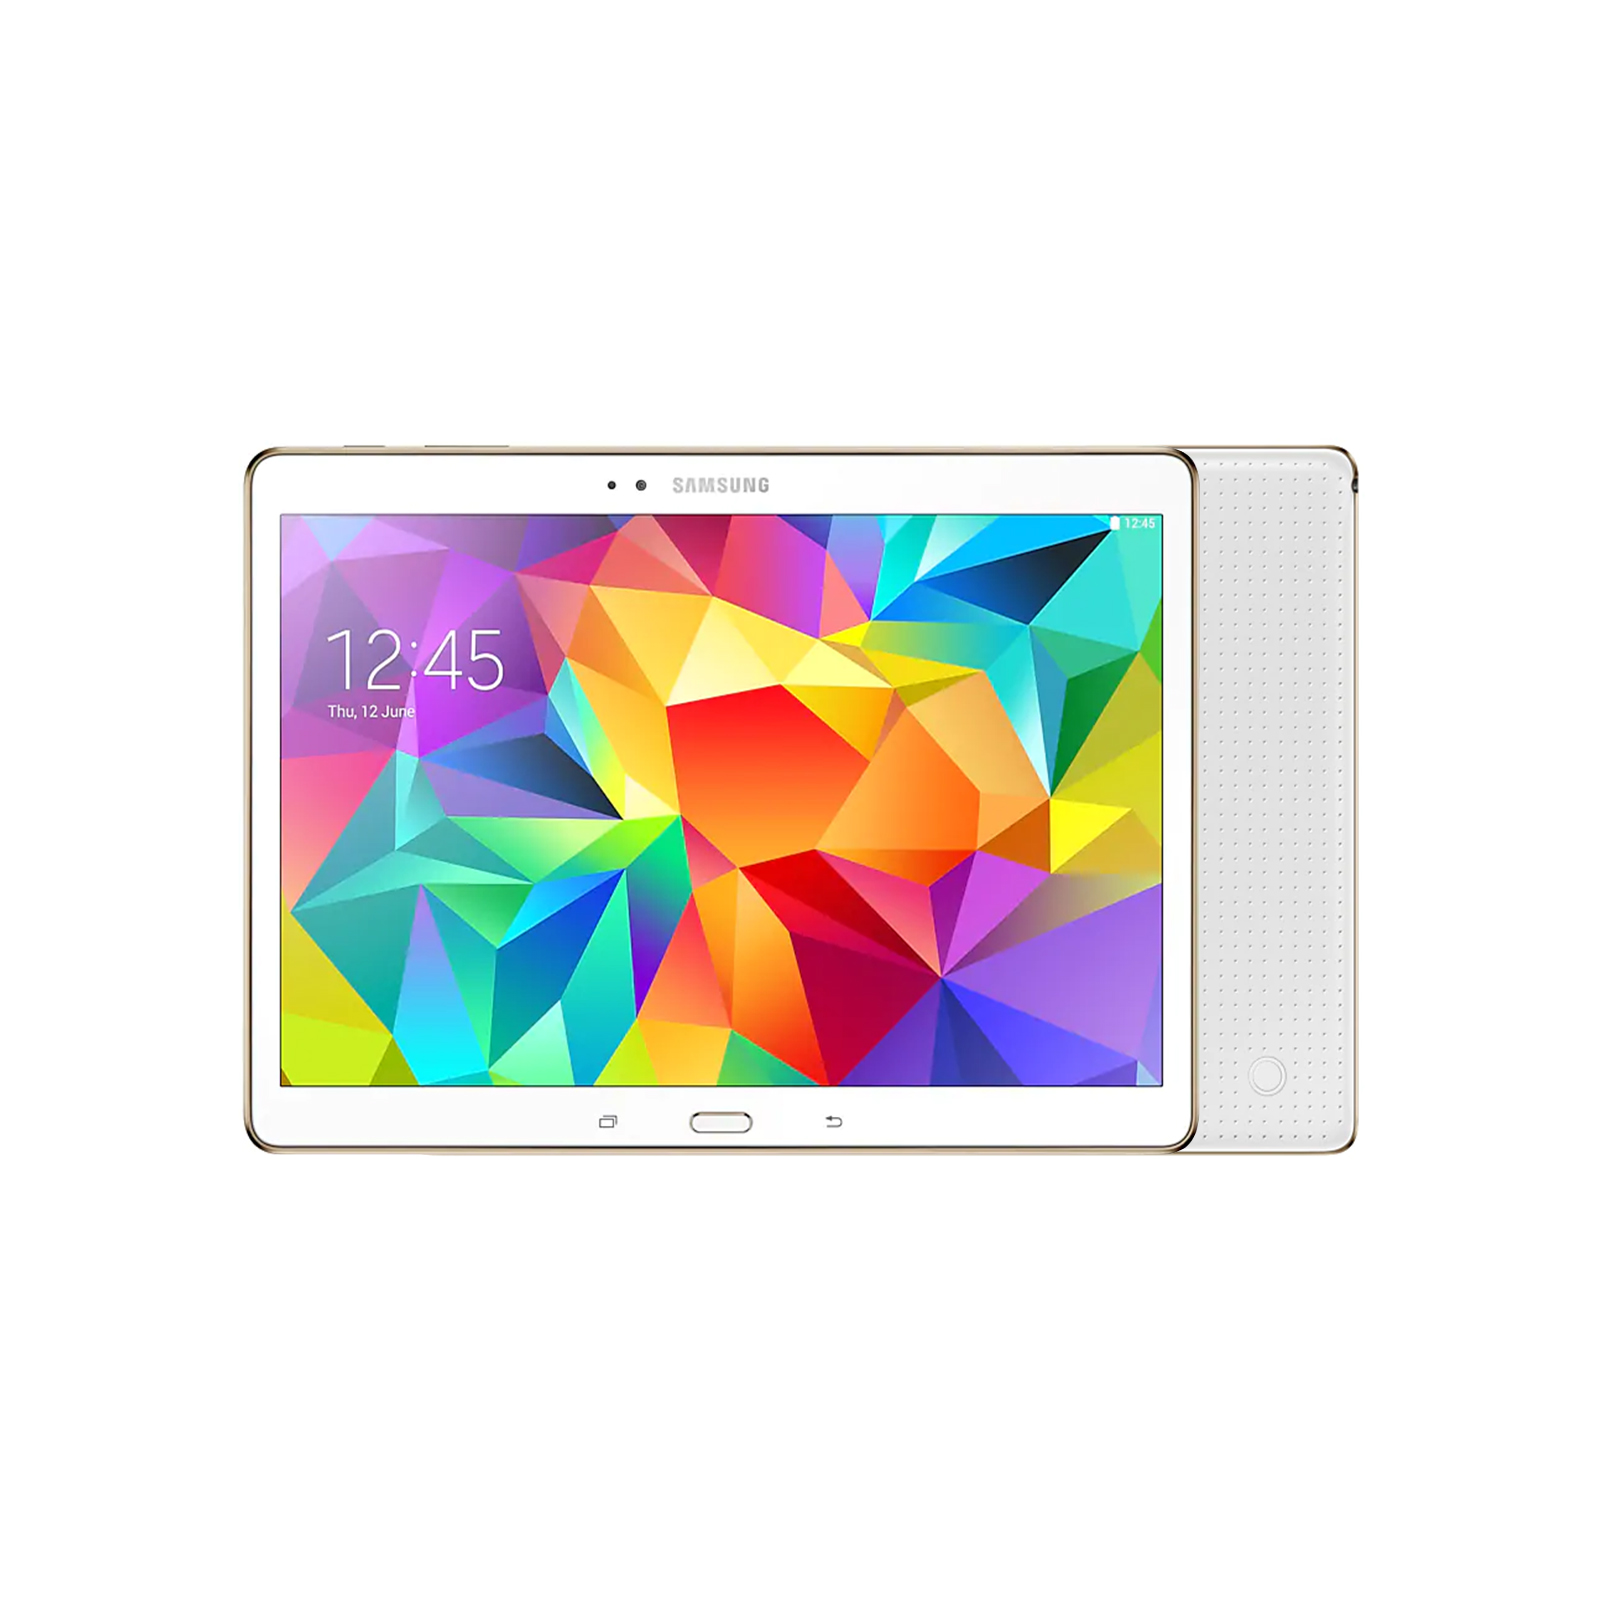 Samsung Galaxy Tab S 10.5 T805 [16GB] [White] [As New] 